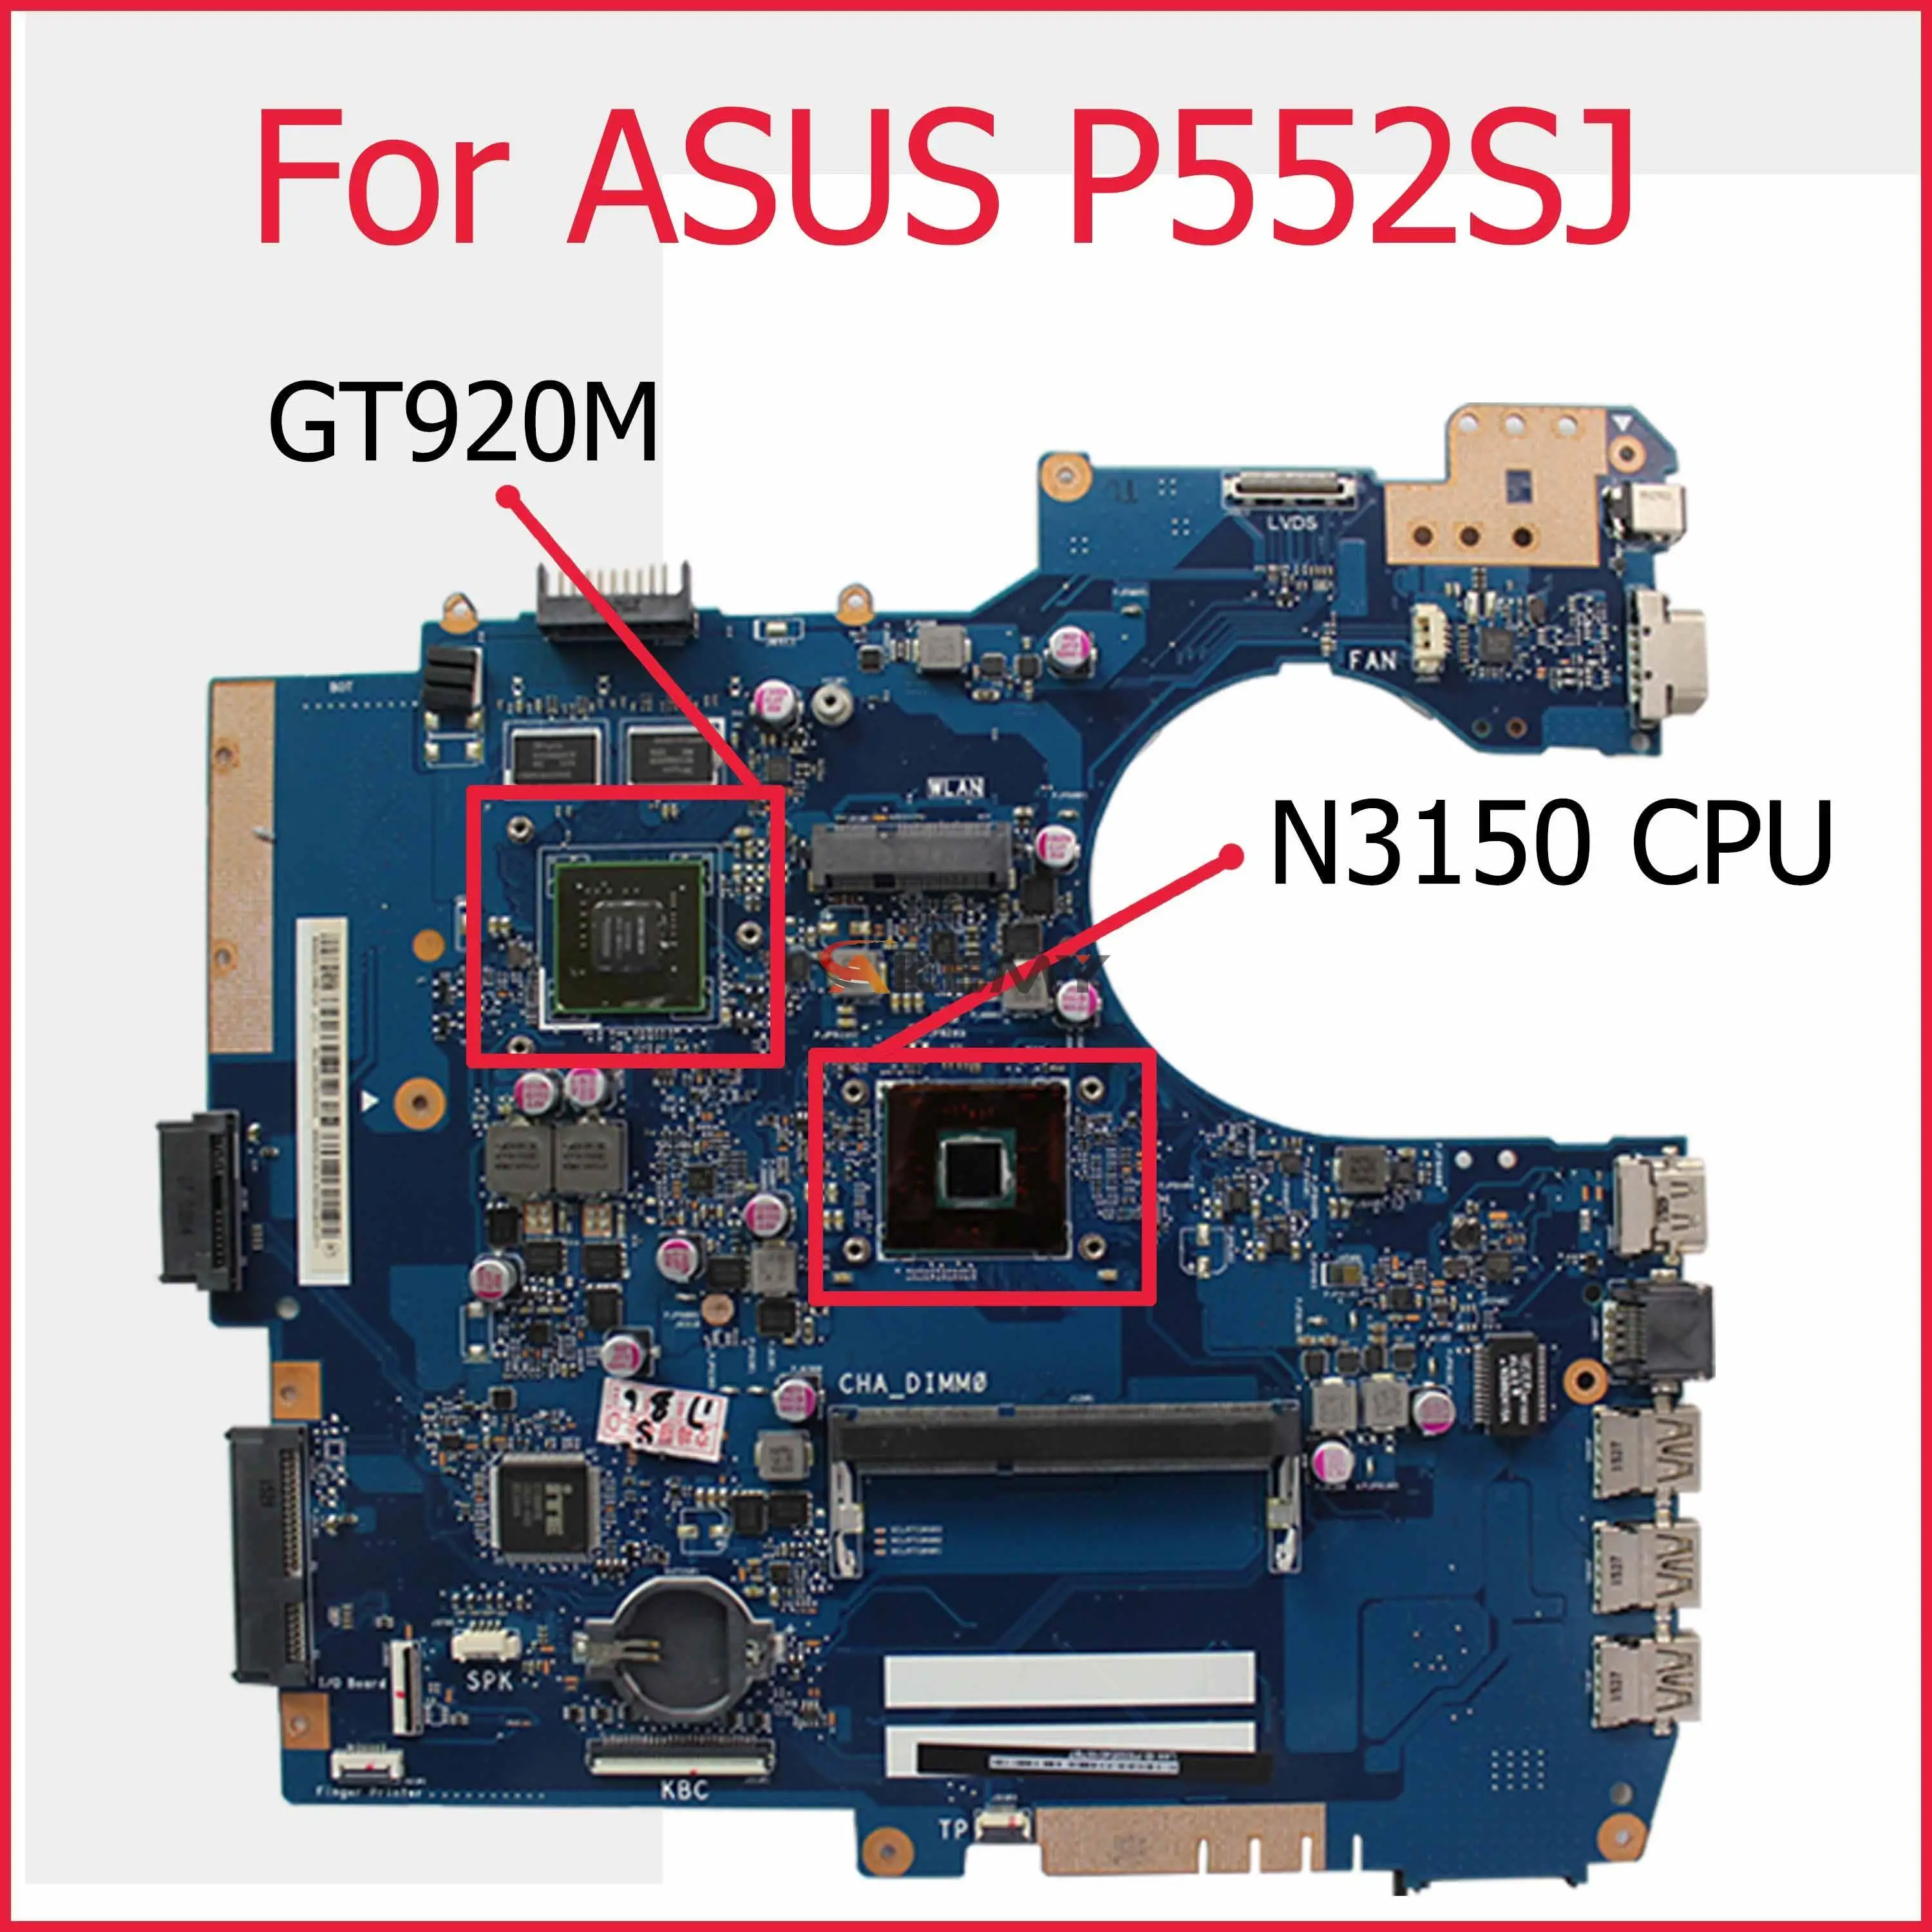 

Akemy P552SJ Laptop motherboard For Asus P552SJ PU552SJ PRO552S P552S PU552S P552SA N3150 CPU GT920M Test OK Mainboard